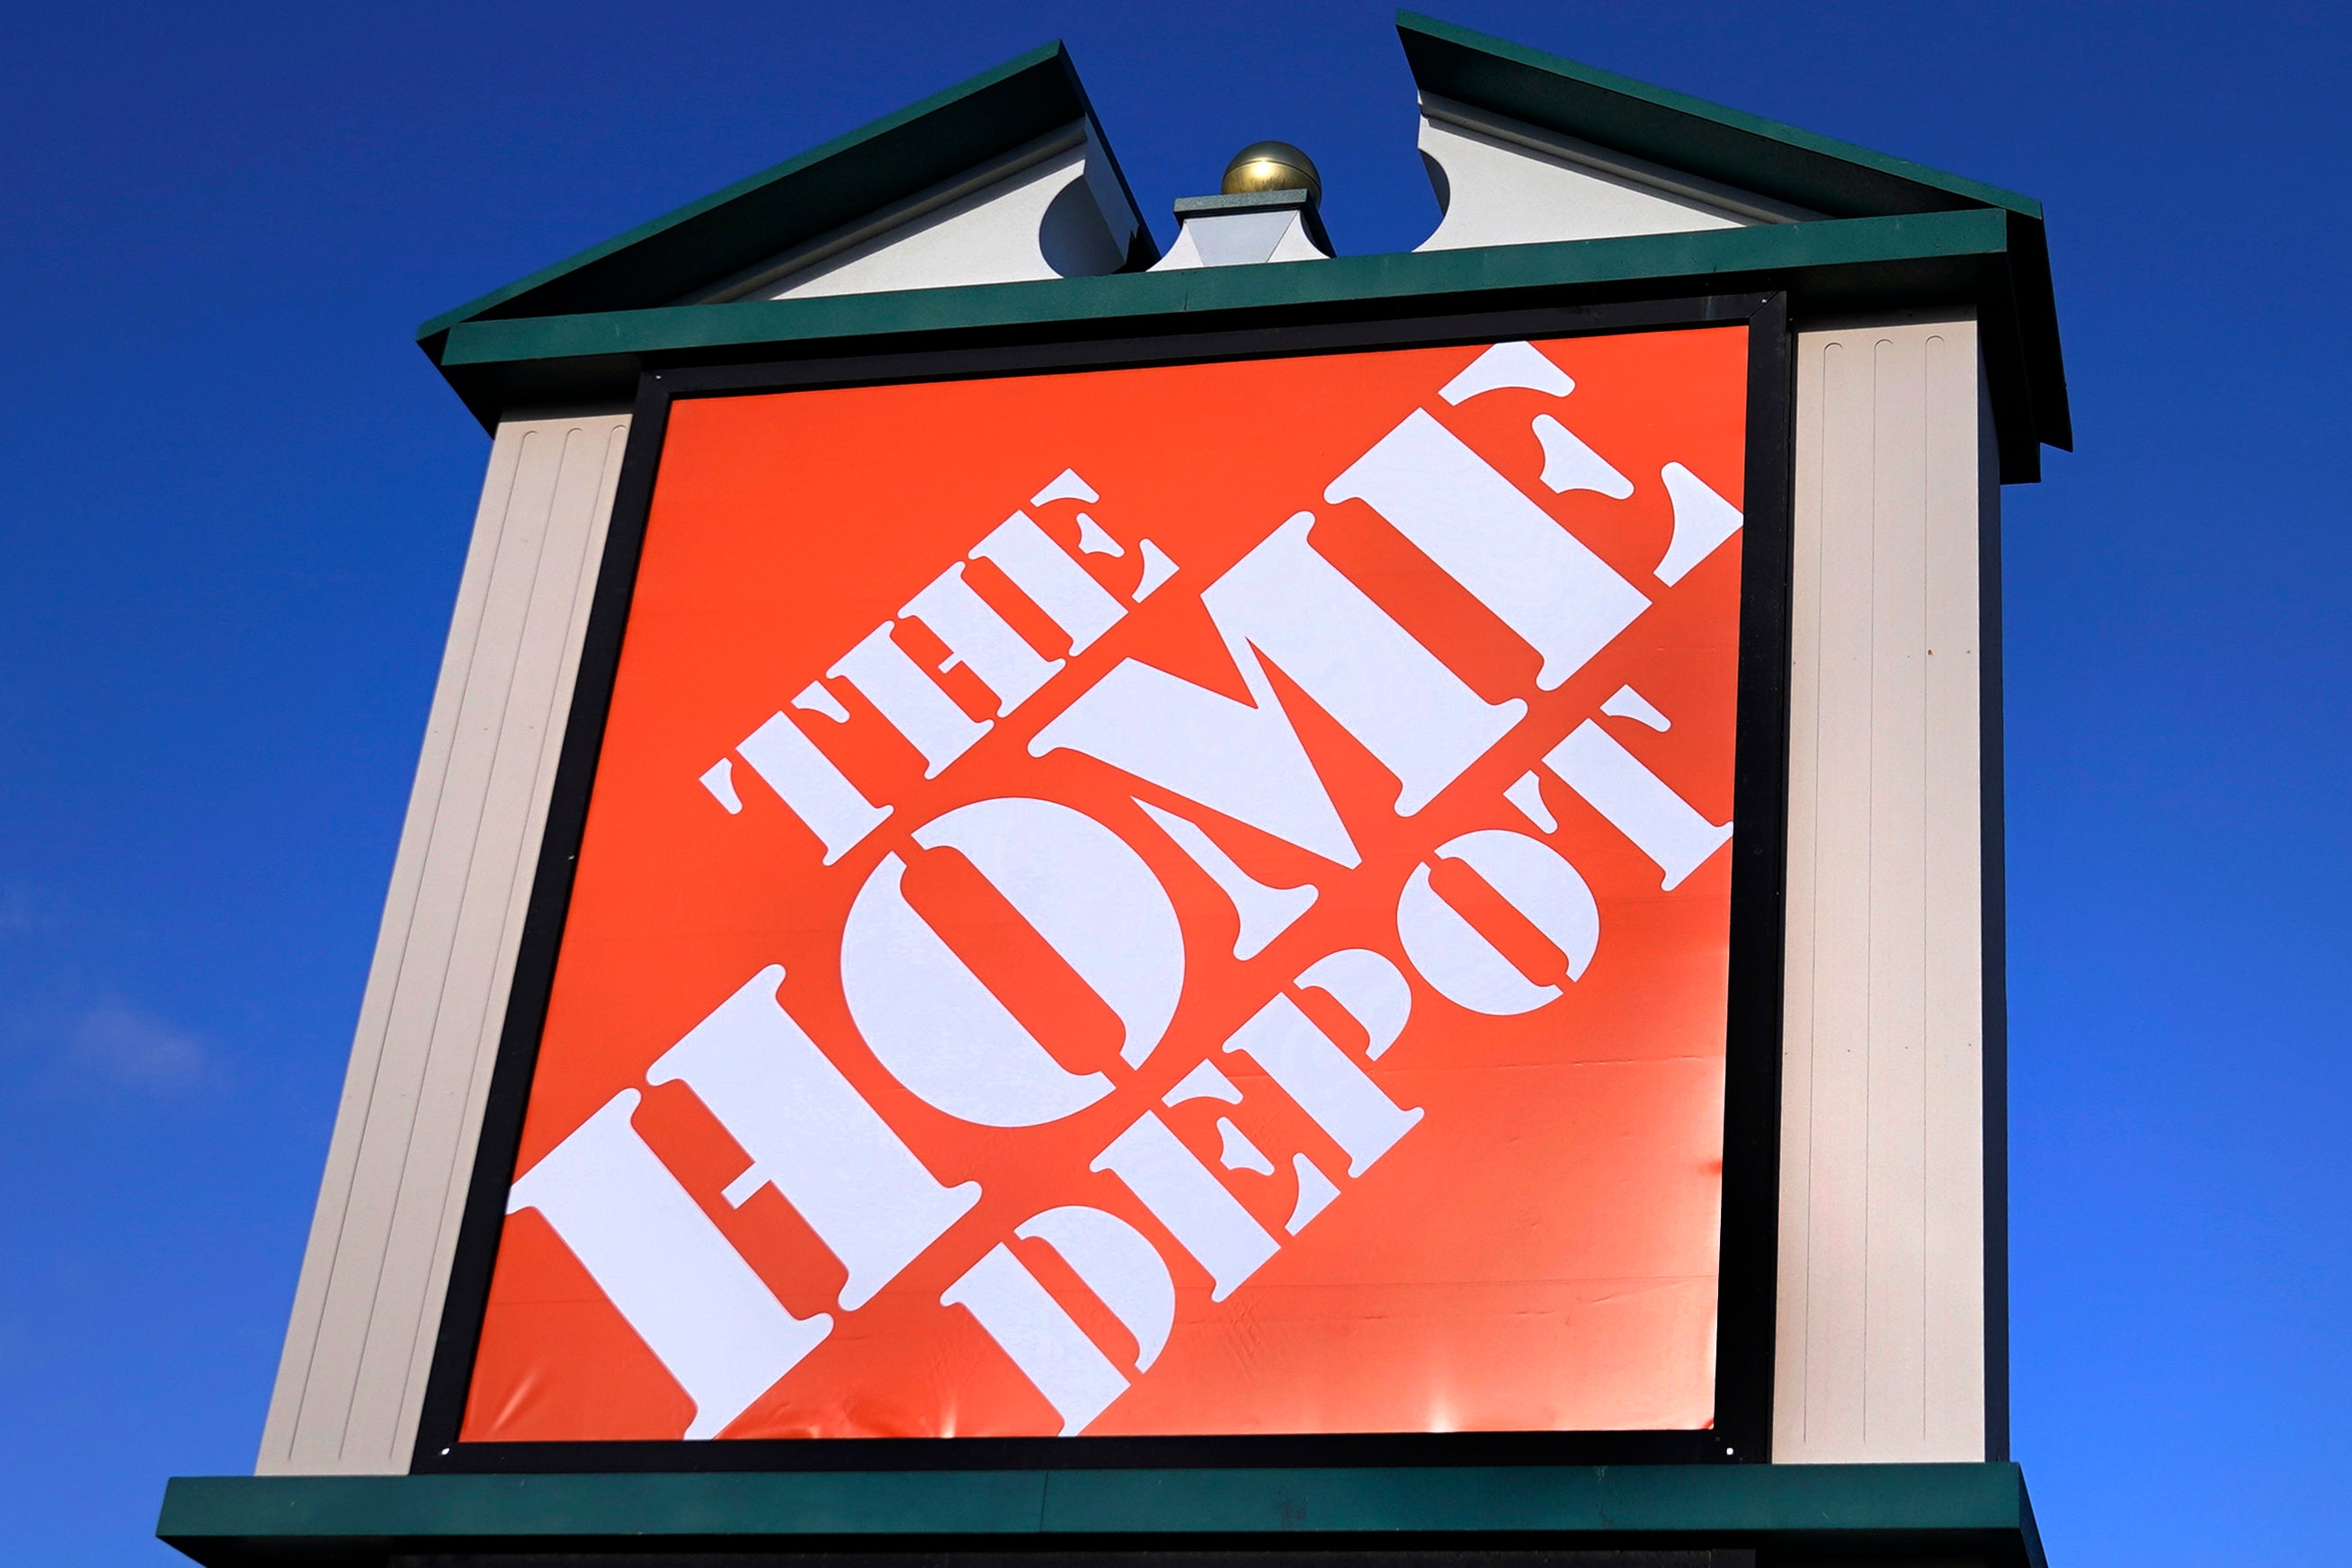 Home Depot agrees to 17.5m settlement in 2014 data breach Settlement